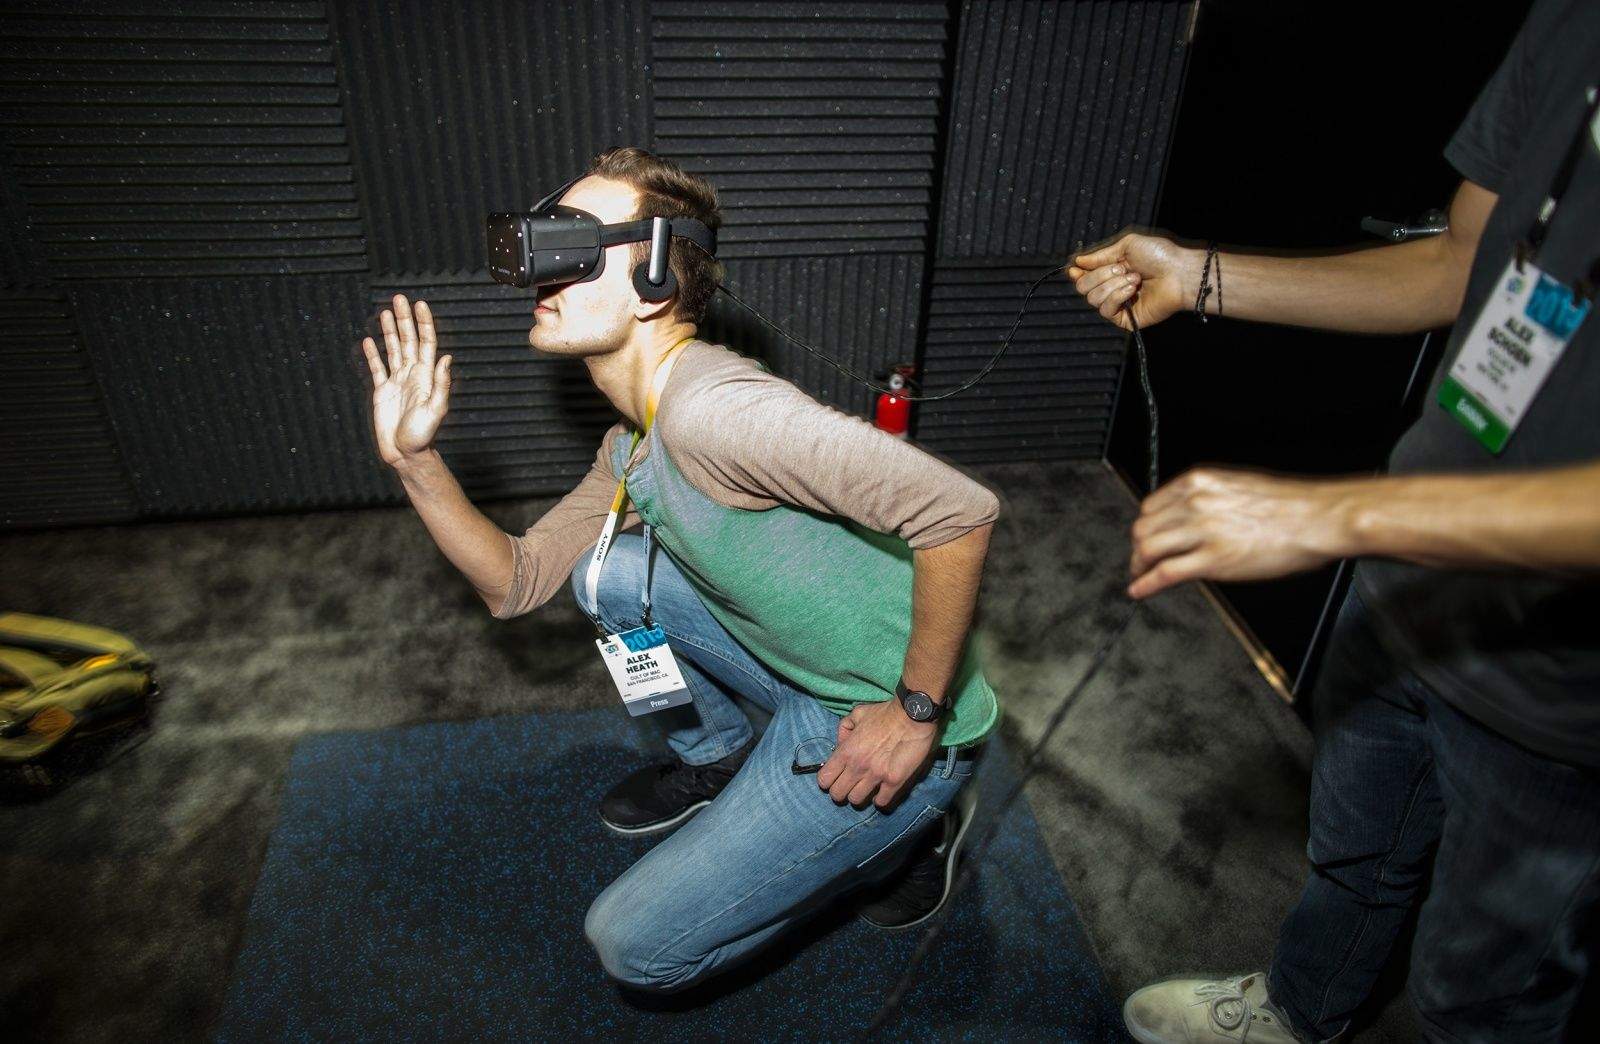 Alex Heath gets down in the Oculus booth. Photo: Jim Merithew/Cult of Mac